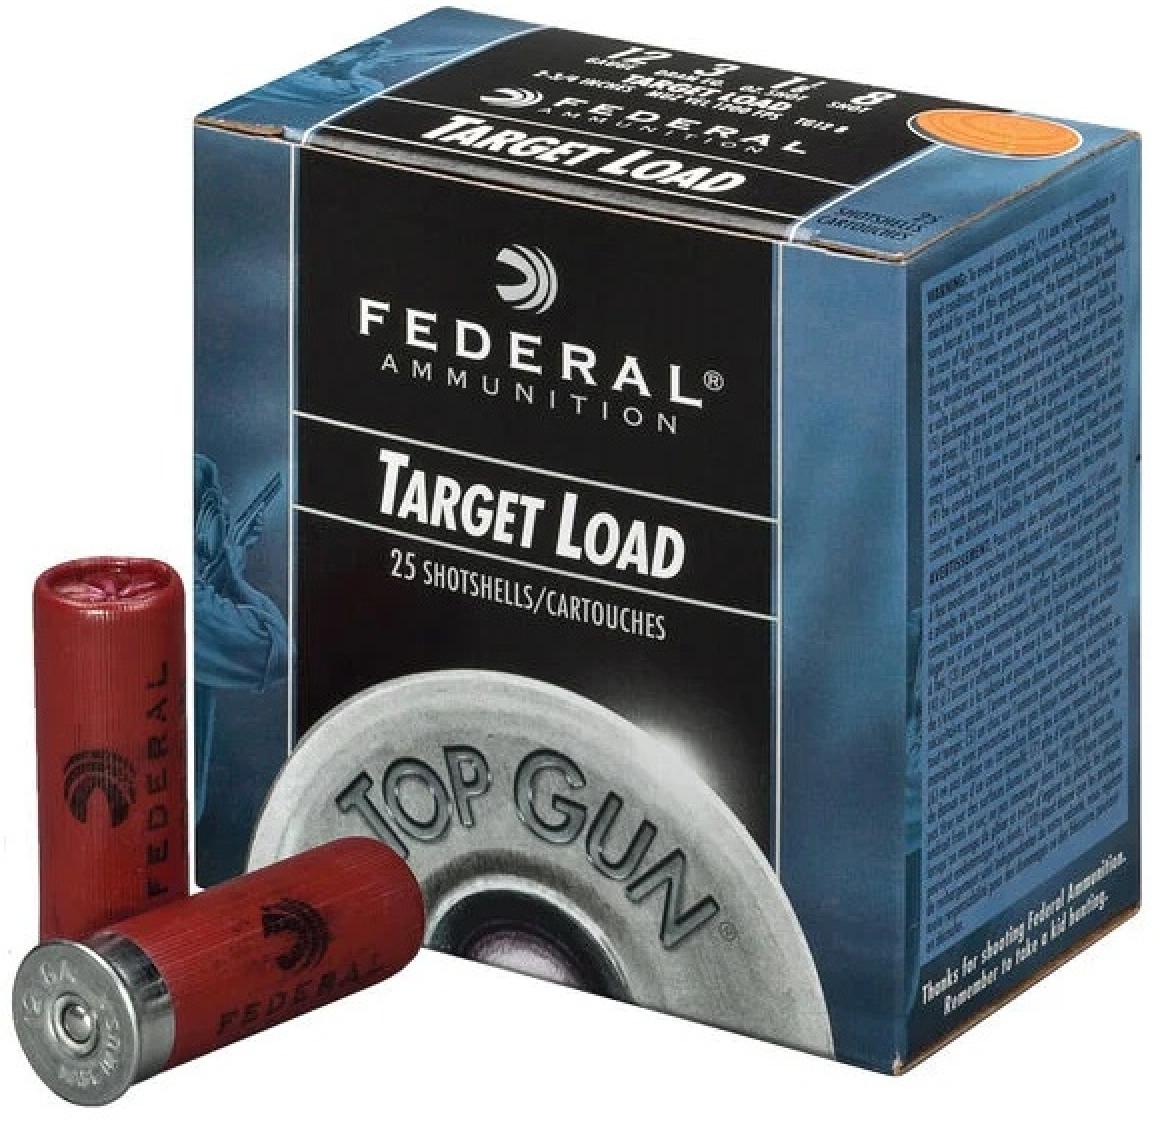 Federal Premium Top Gun Target Load 12 gauge #8 Shotshells